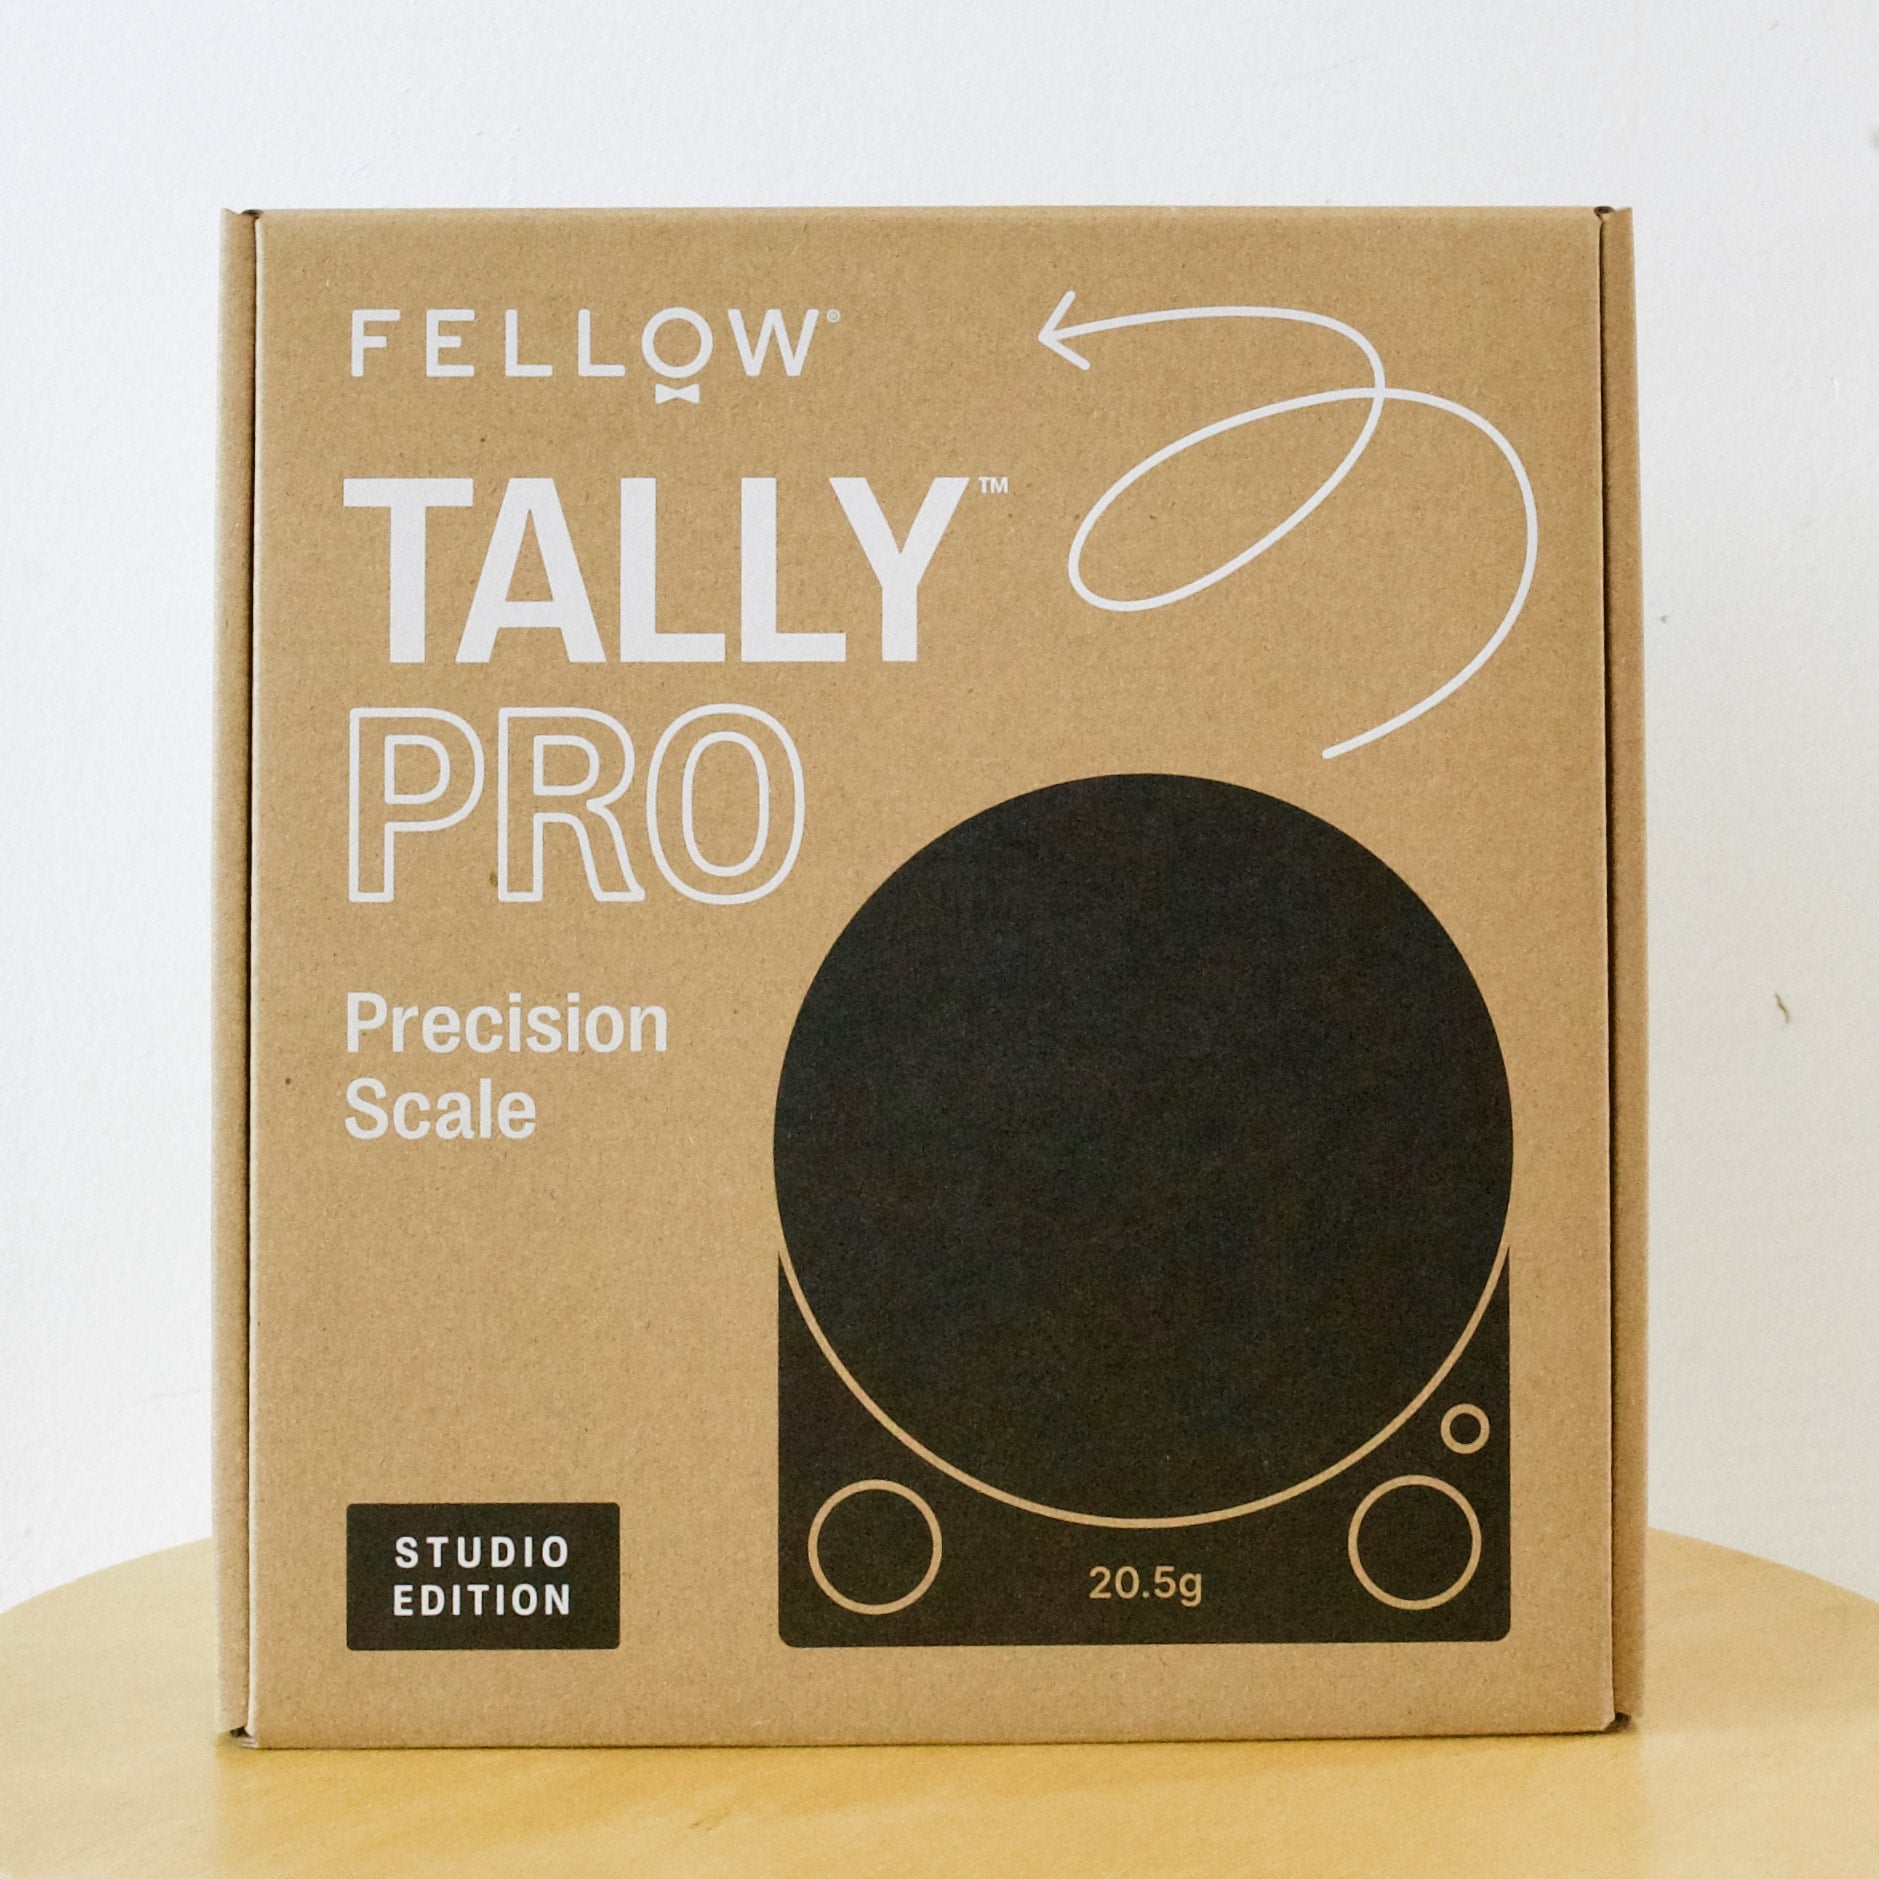 Fellow Tally Pro Precision Scale